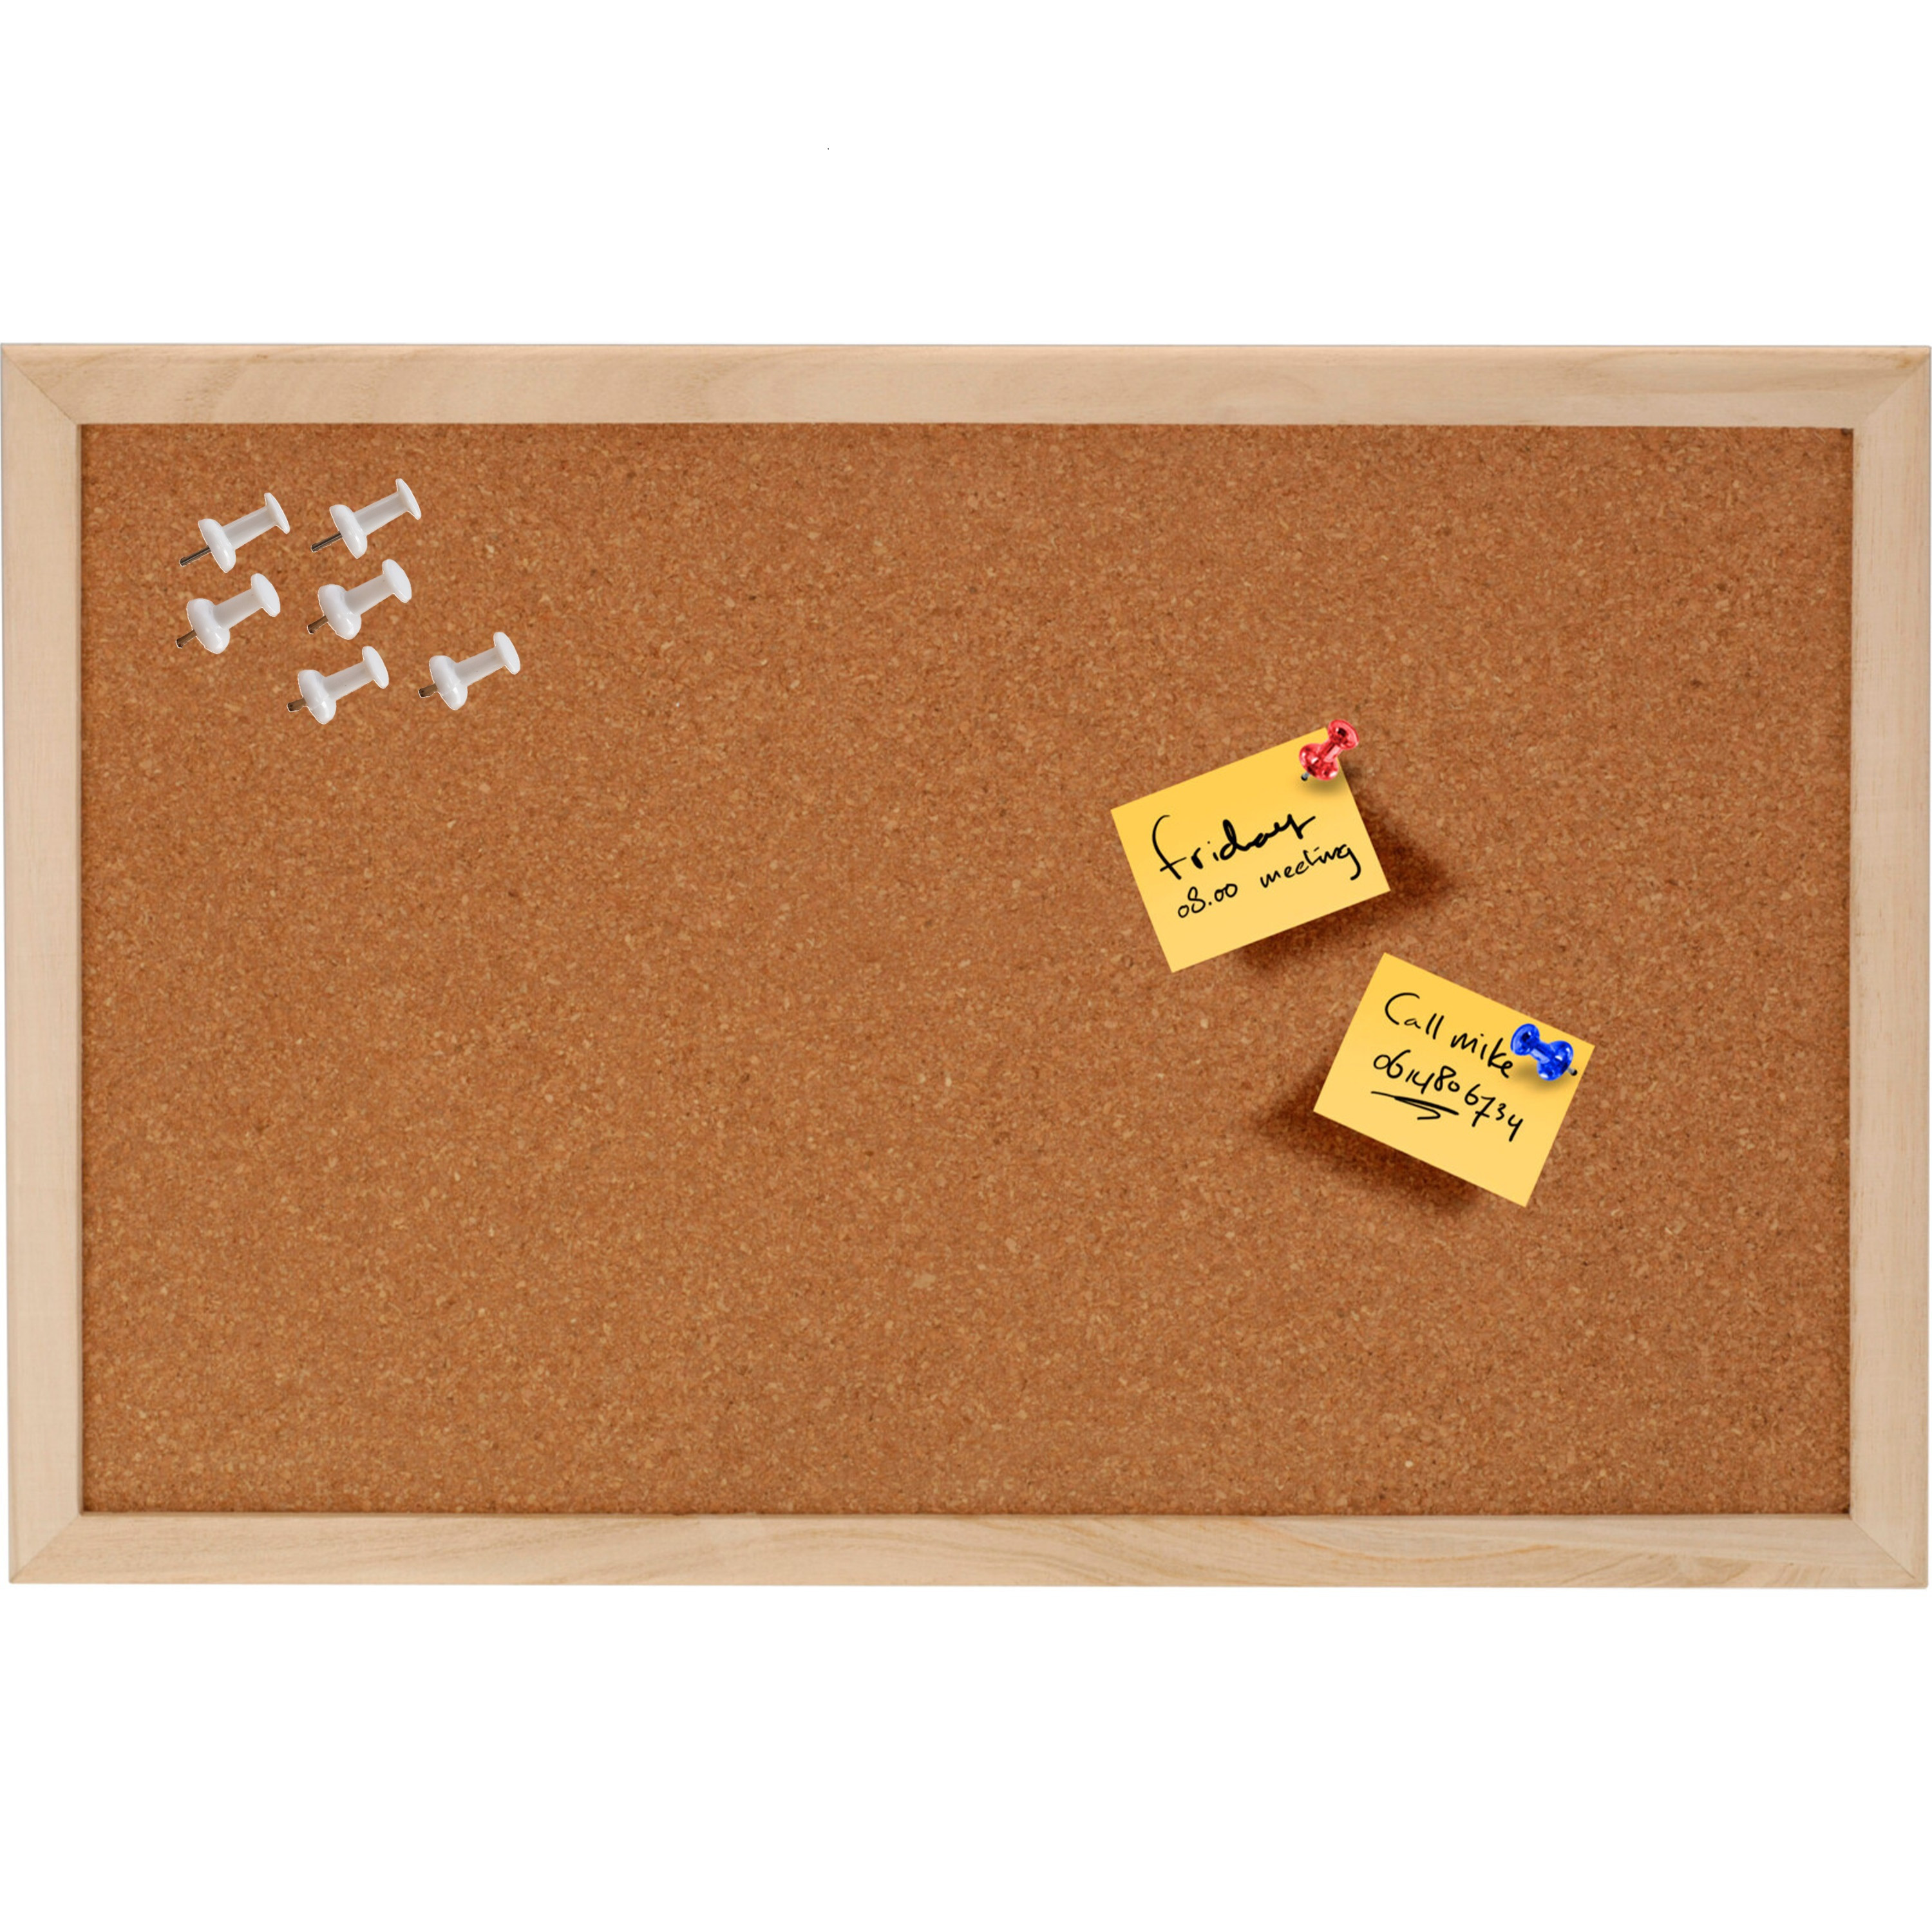 Home & Styling prikbord van hout-kurk 45 x 30 cm incl 25x witte punt punaises memobord